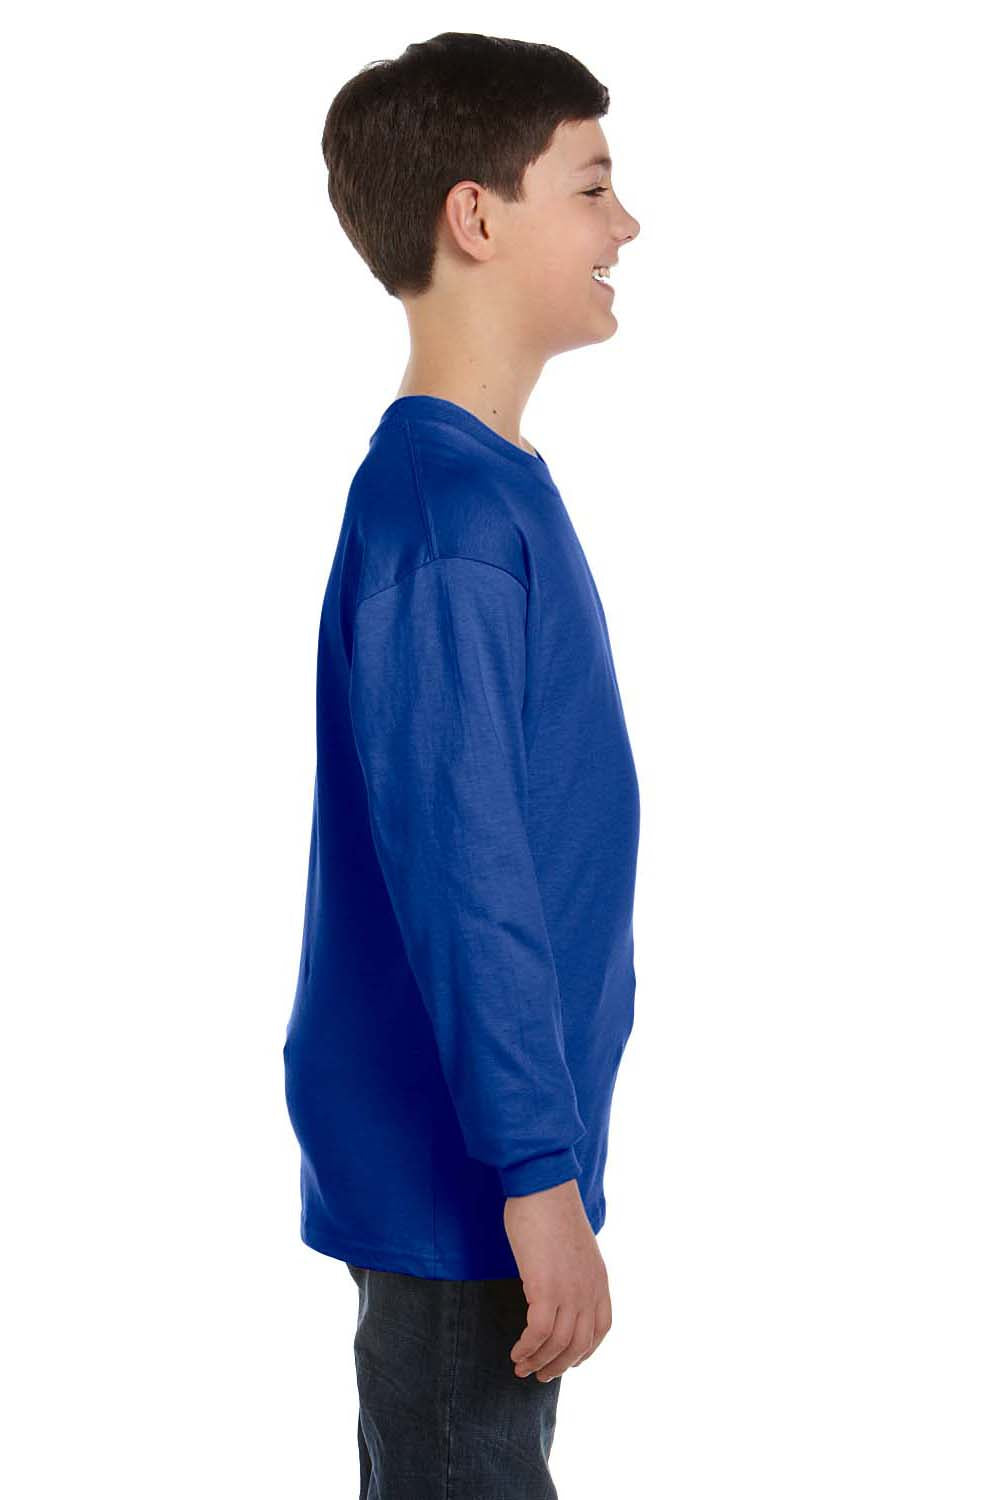 Hanes 5546 Youth ComfortSoft Long Sleeve Crewneck T-Shirt Royal Blue Side